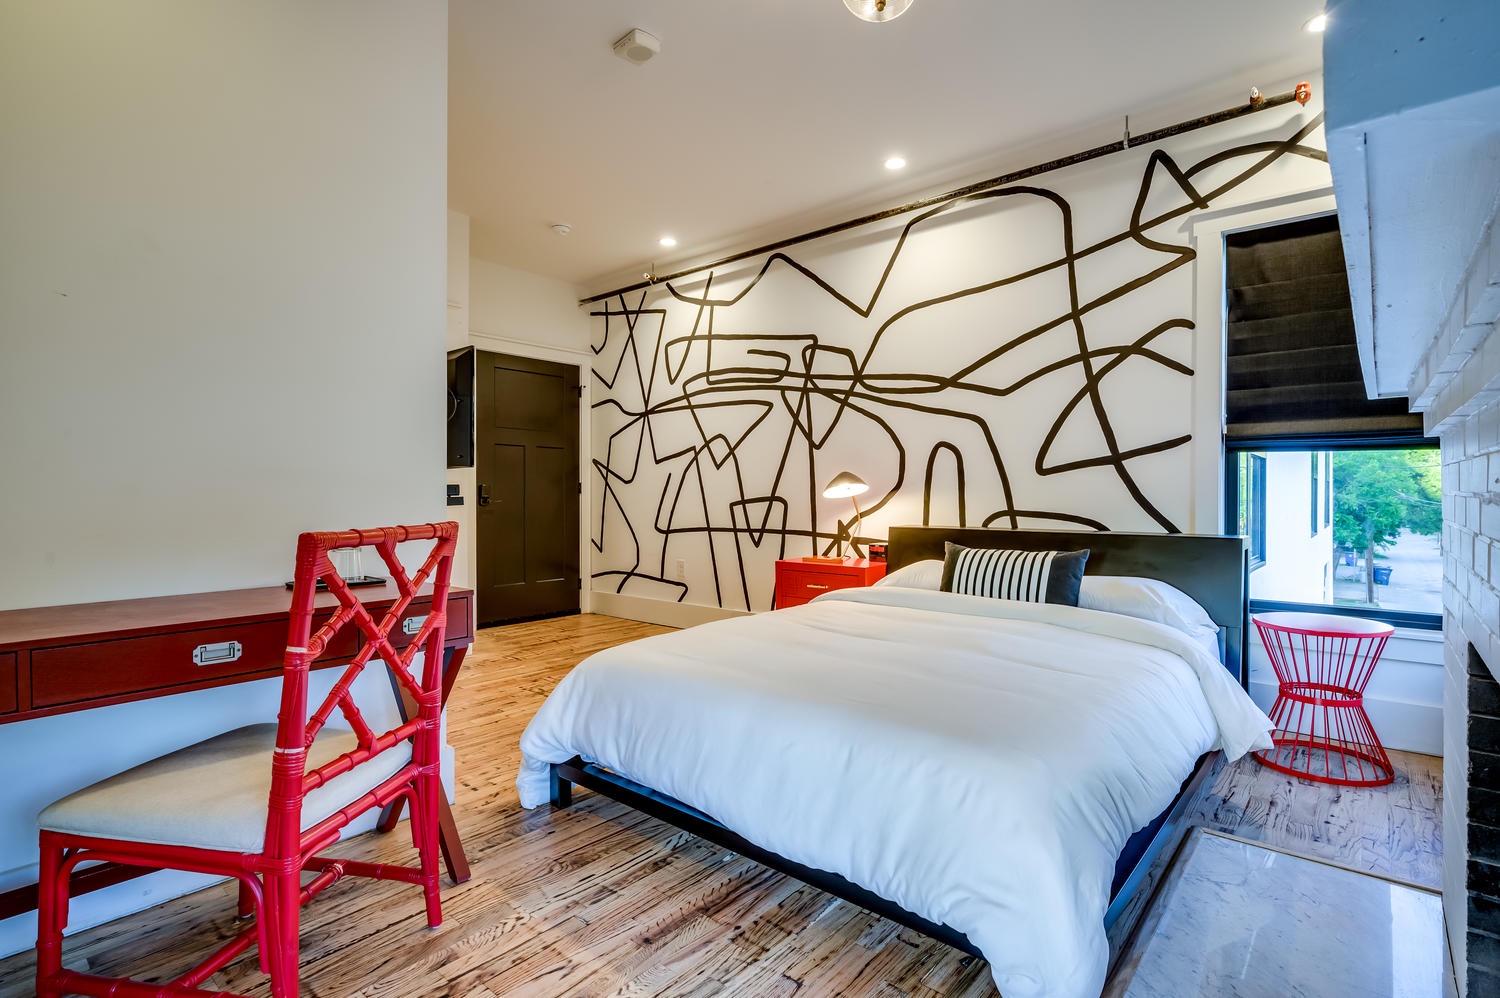 Suite 201 – The 2nd Floor Red, White & Black Suite boasts a Casper Queen Bed, Smart TV, and En Suite Bathroom